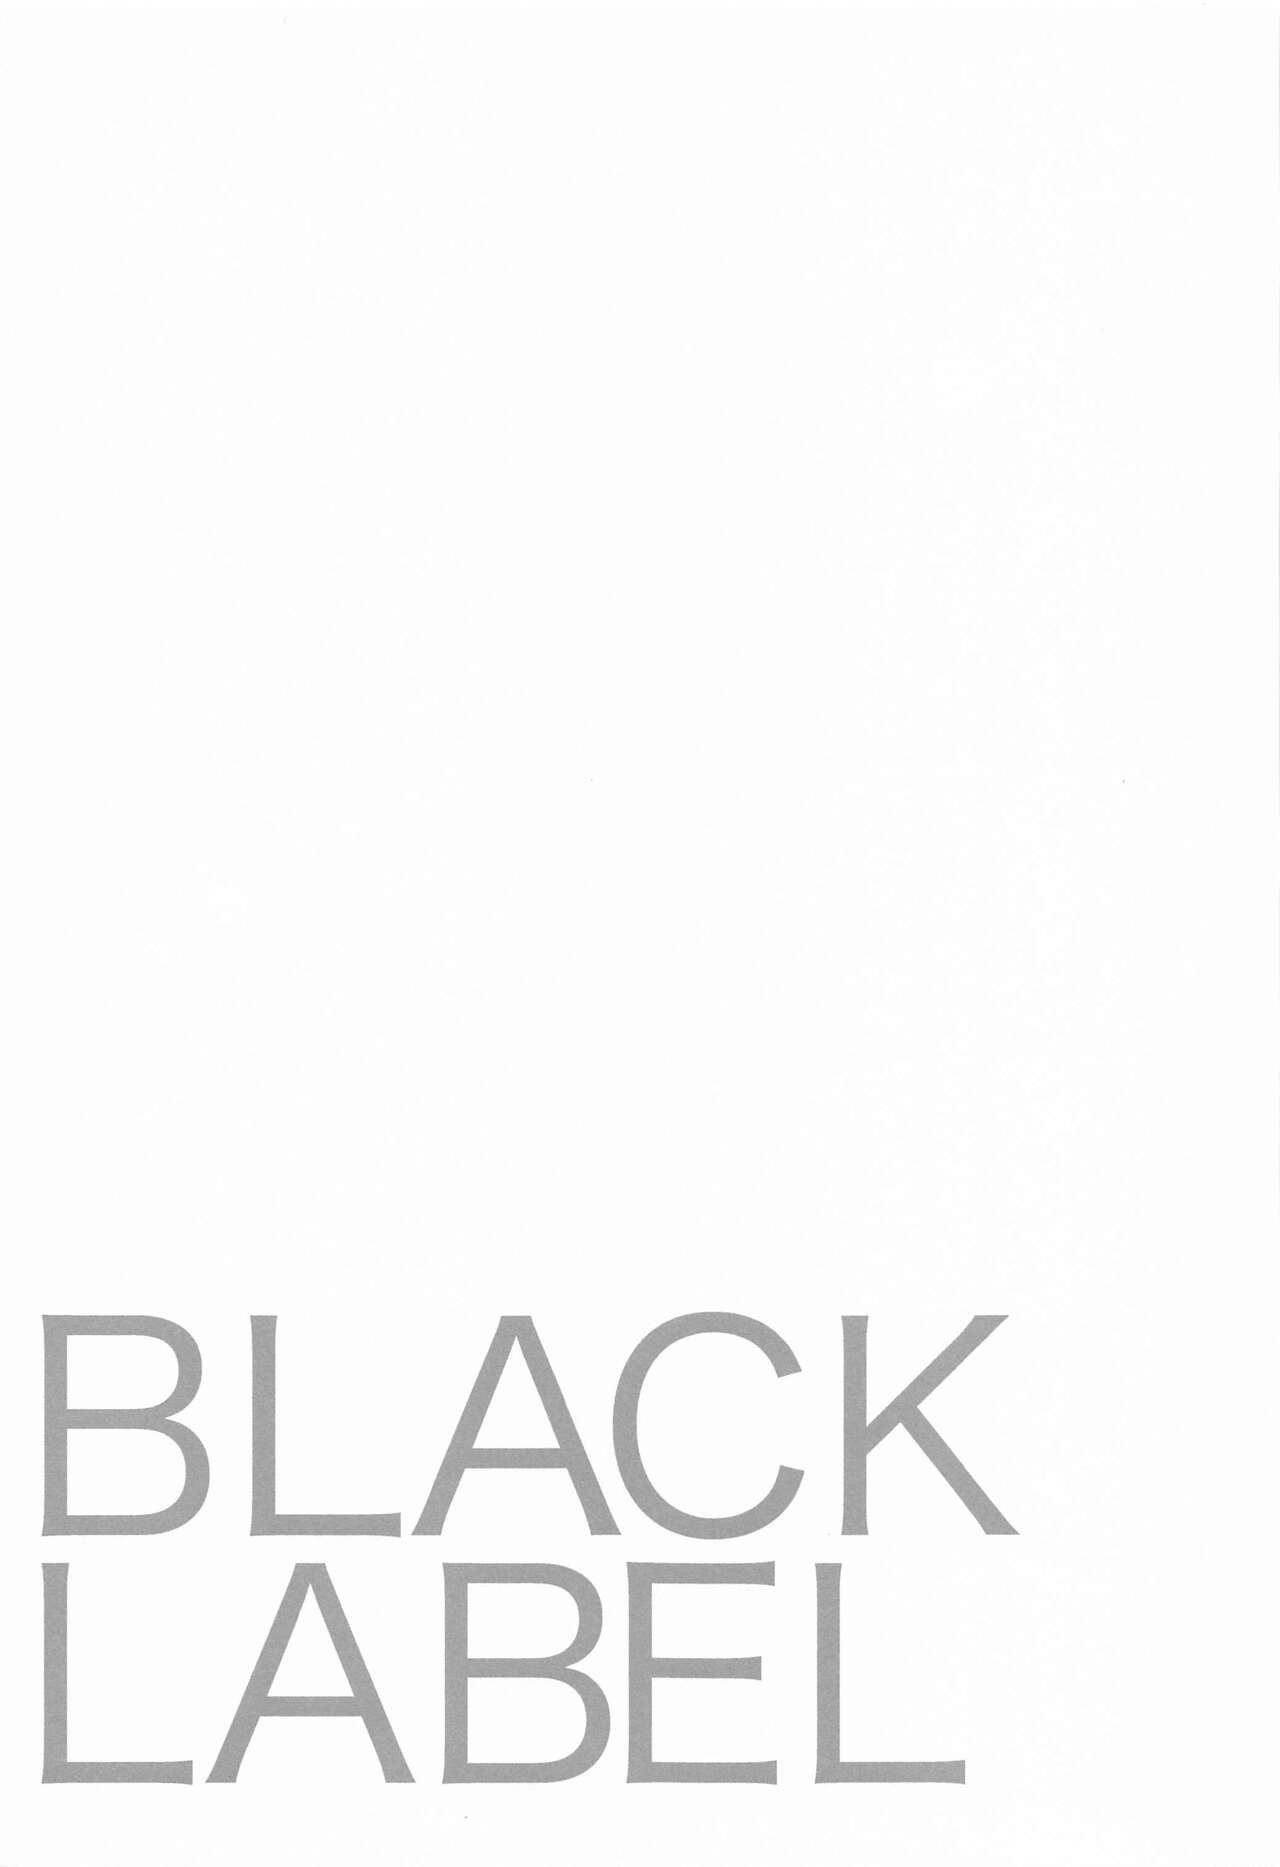 BLACK LABEL - Foto 2